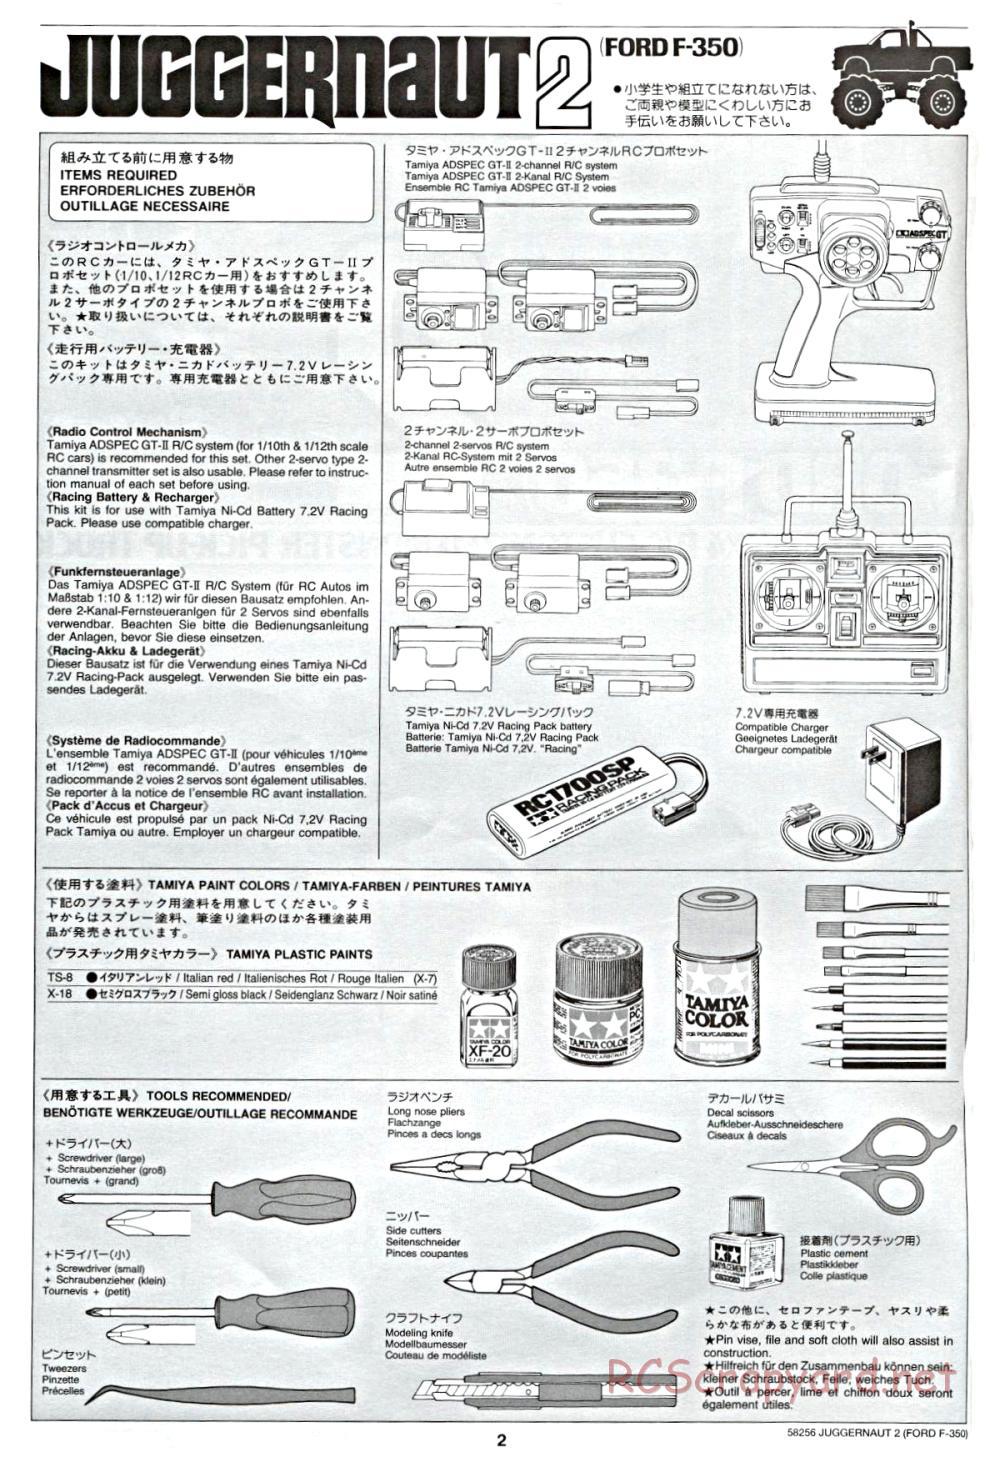 Tamiya - Juggernaut 2 Chassis - Manual - Page 2